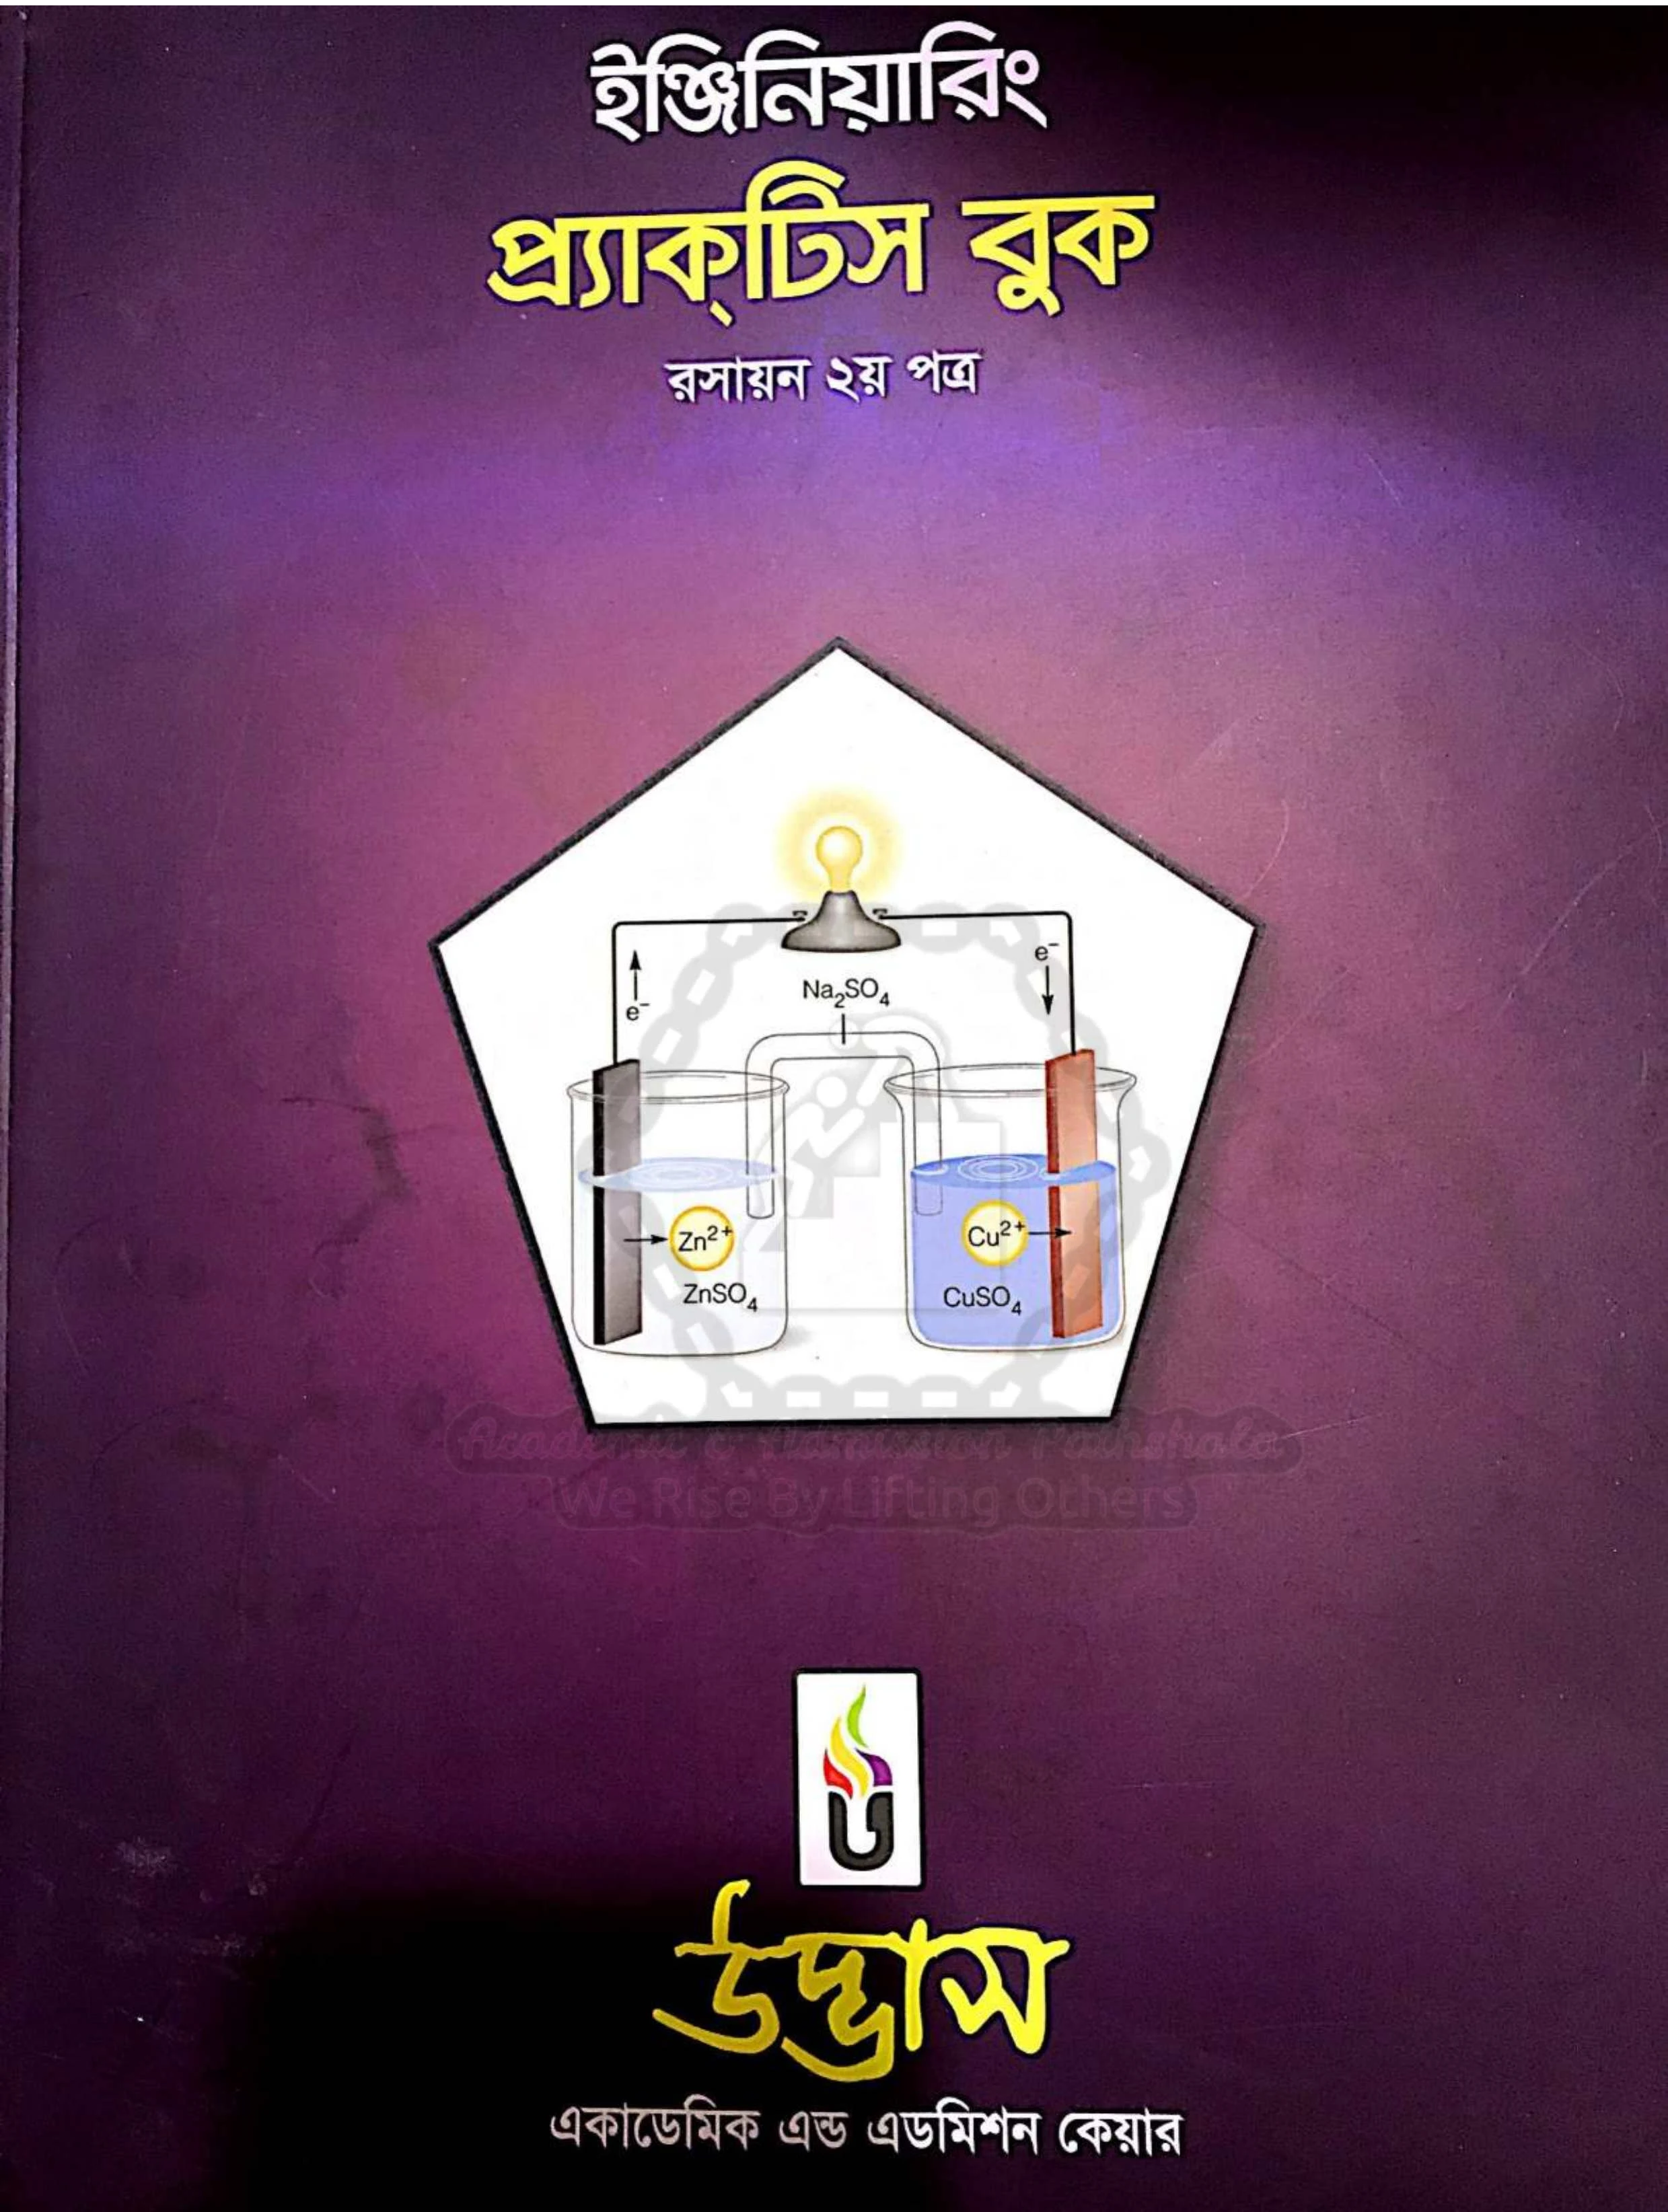 Udvash engineering chemistry 2nd Paper Practice Book Pdf, chemistry practice book pdf, উদ্ভাস ইঞ্জিনিয়ারিং প্র্যাকটিস বুক PDF (রসায়ন ২য় পত্র)